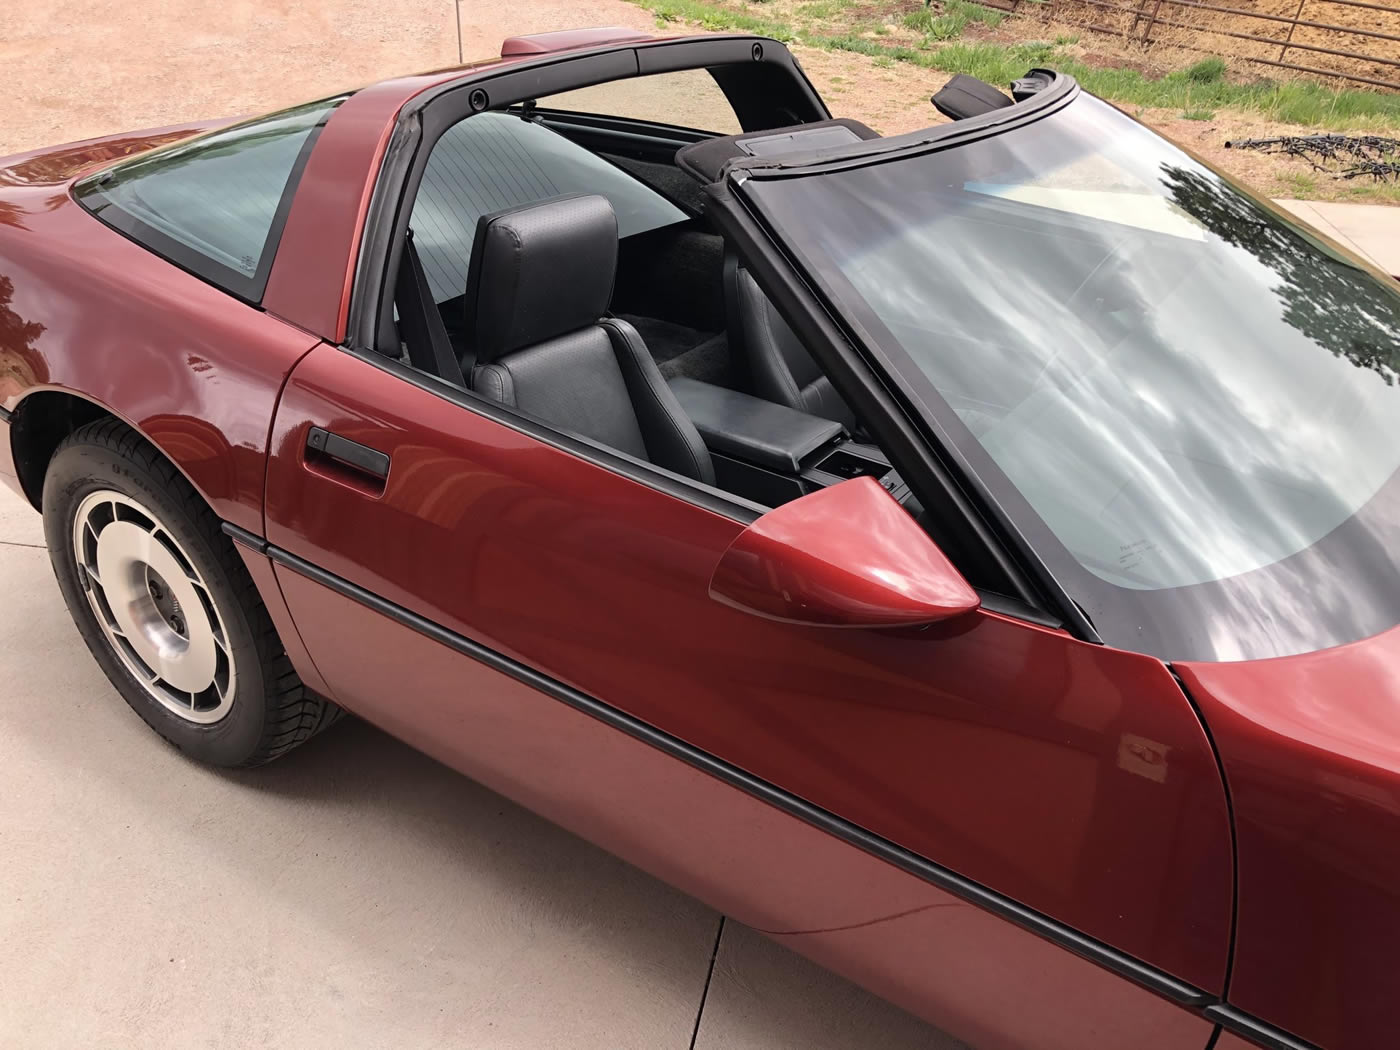 1987 Corvette Coupe in Dark Red Metallic